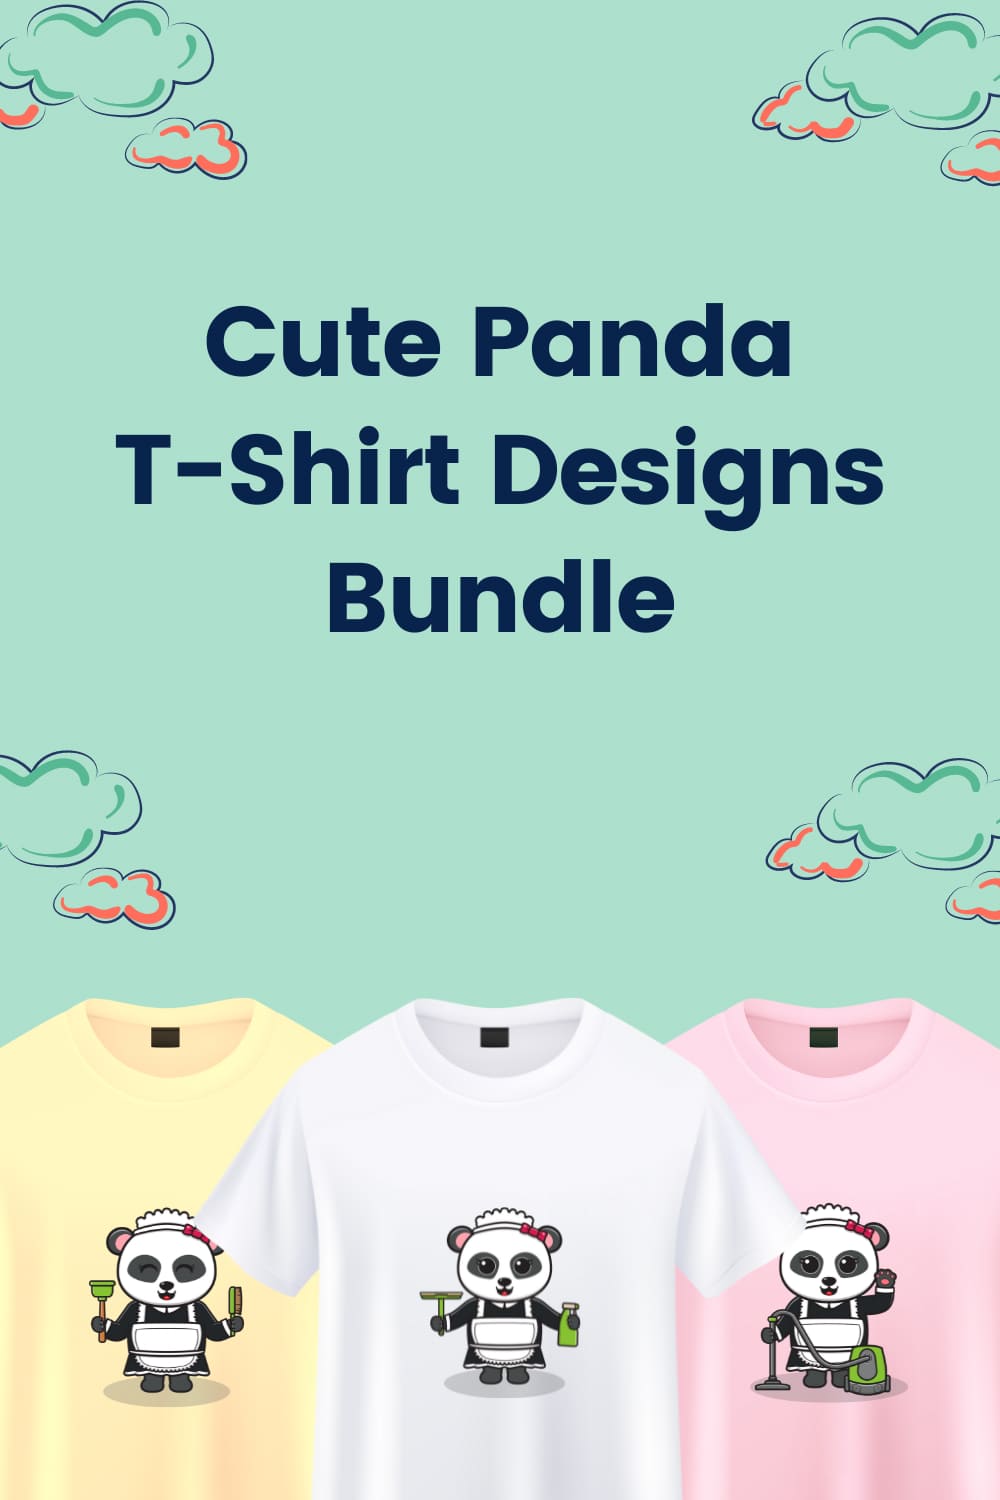 Cute Panda Svg T-shirt Designs Bundle - Pinterest.